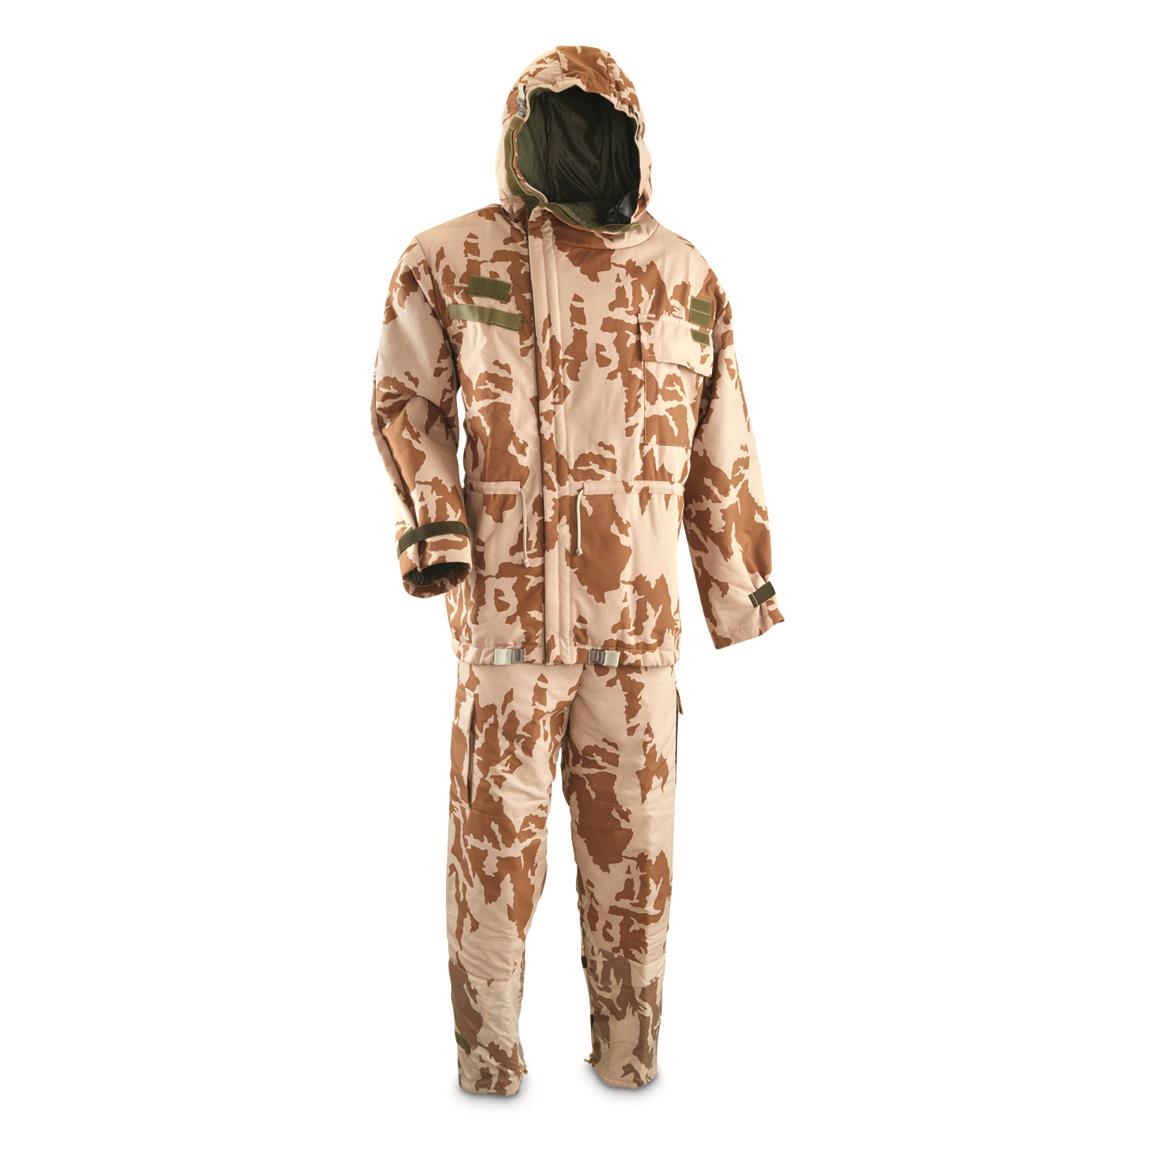 Czech Republic Military Surplus Desert Camo NBC Suit, Sealed in Bag, New, Desert Camo